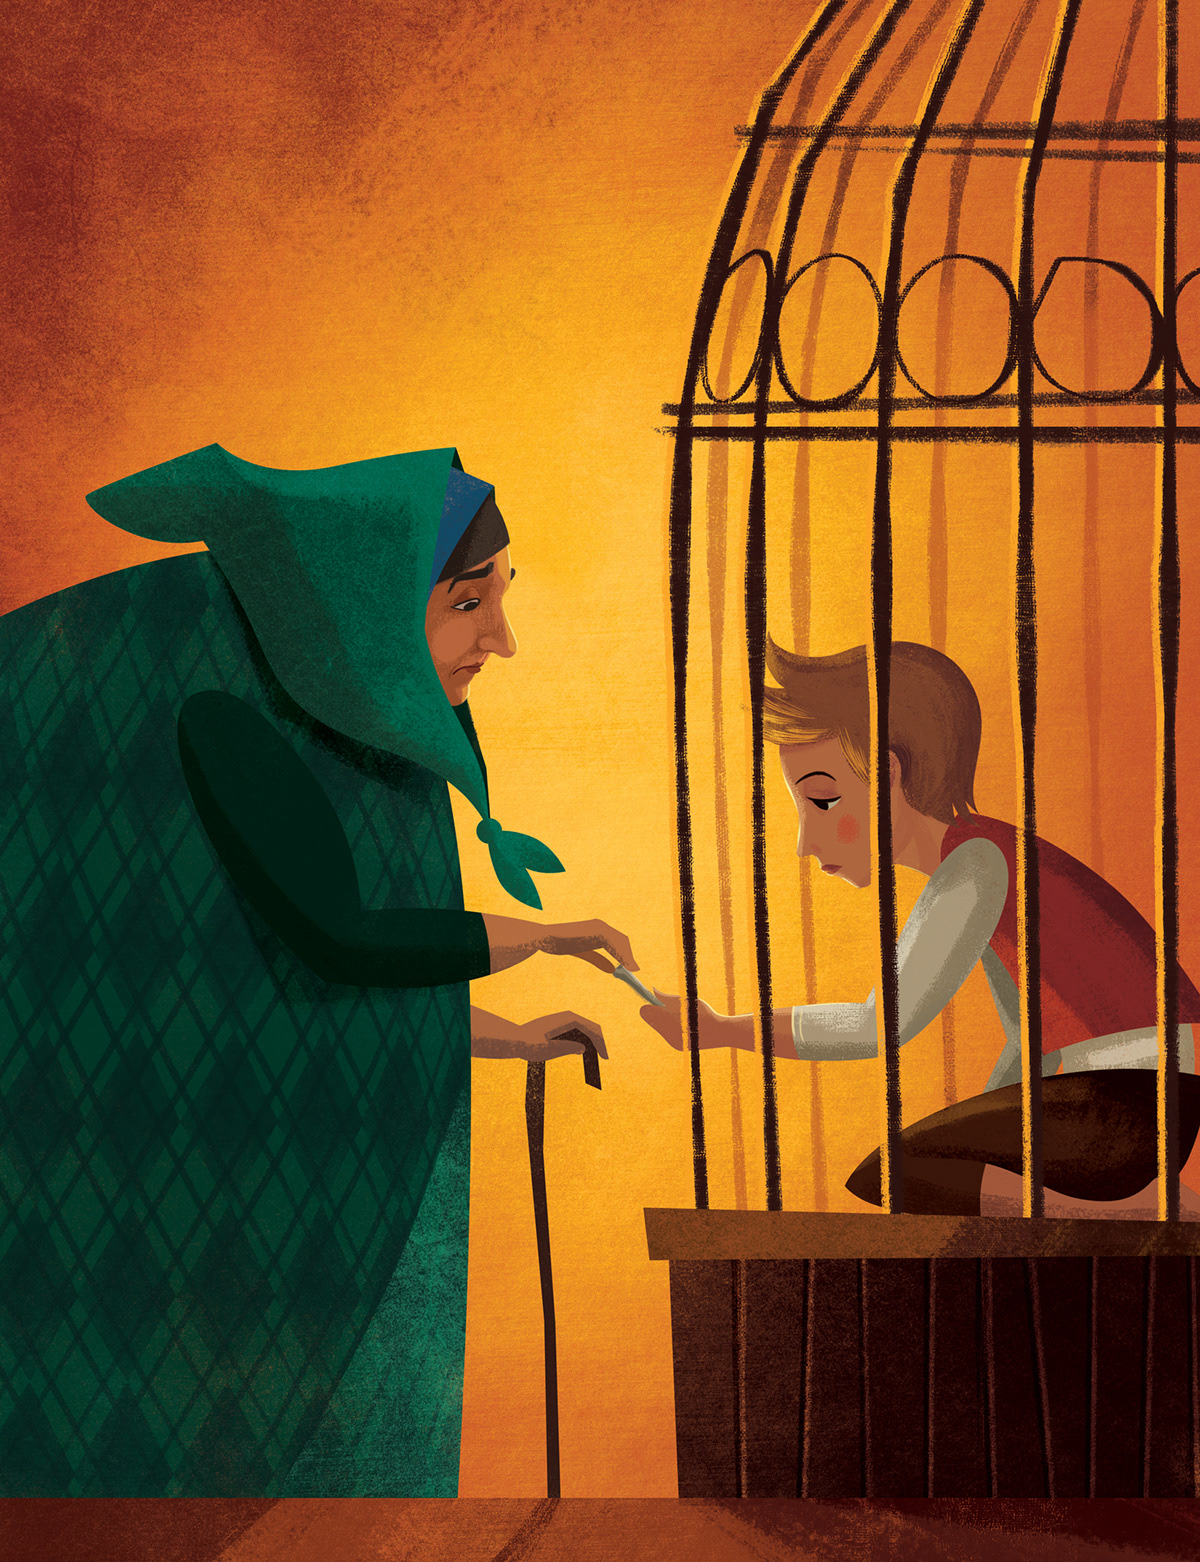 grimm snow white rapunzel illustrations children's book picturebook anna láng fairy tale hansel and gretel